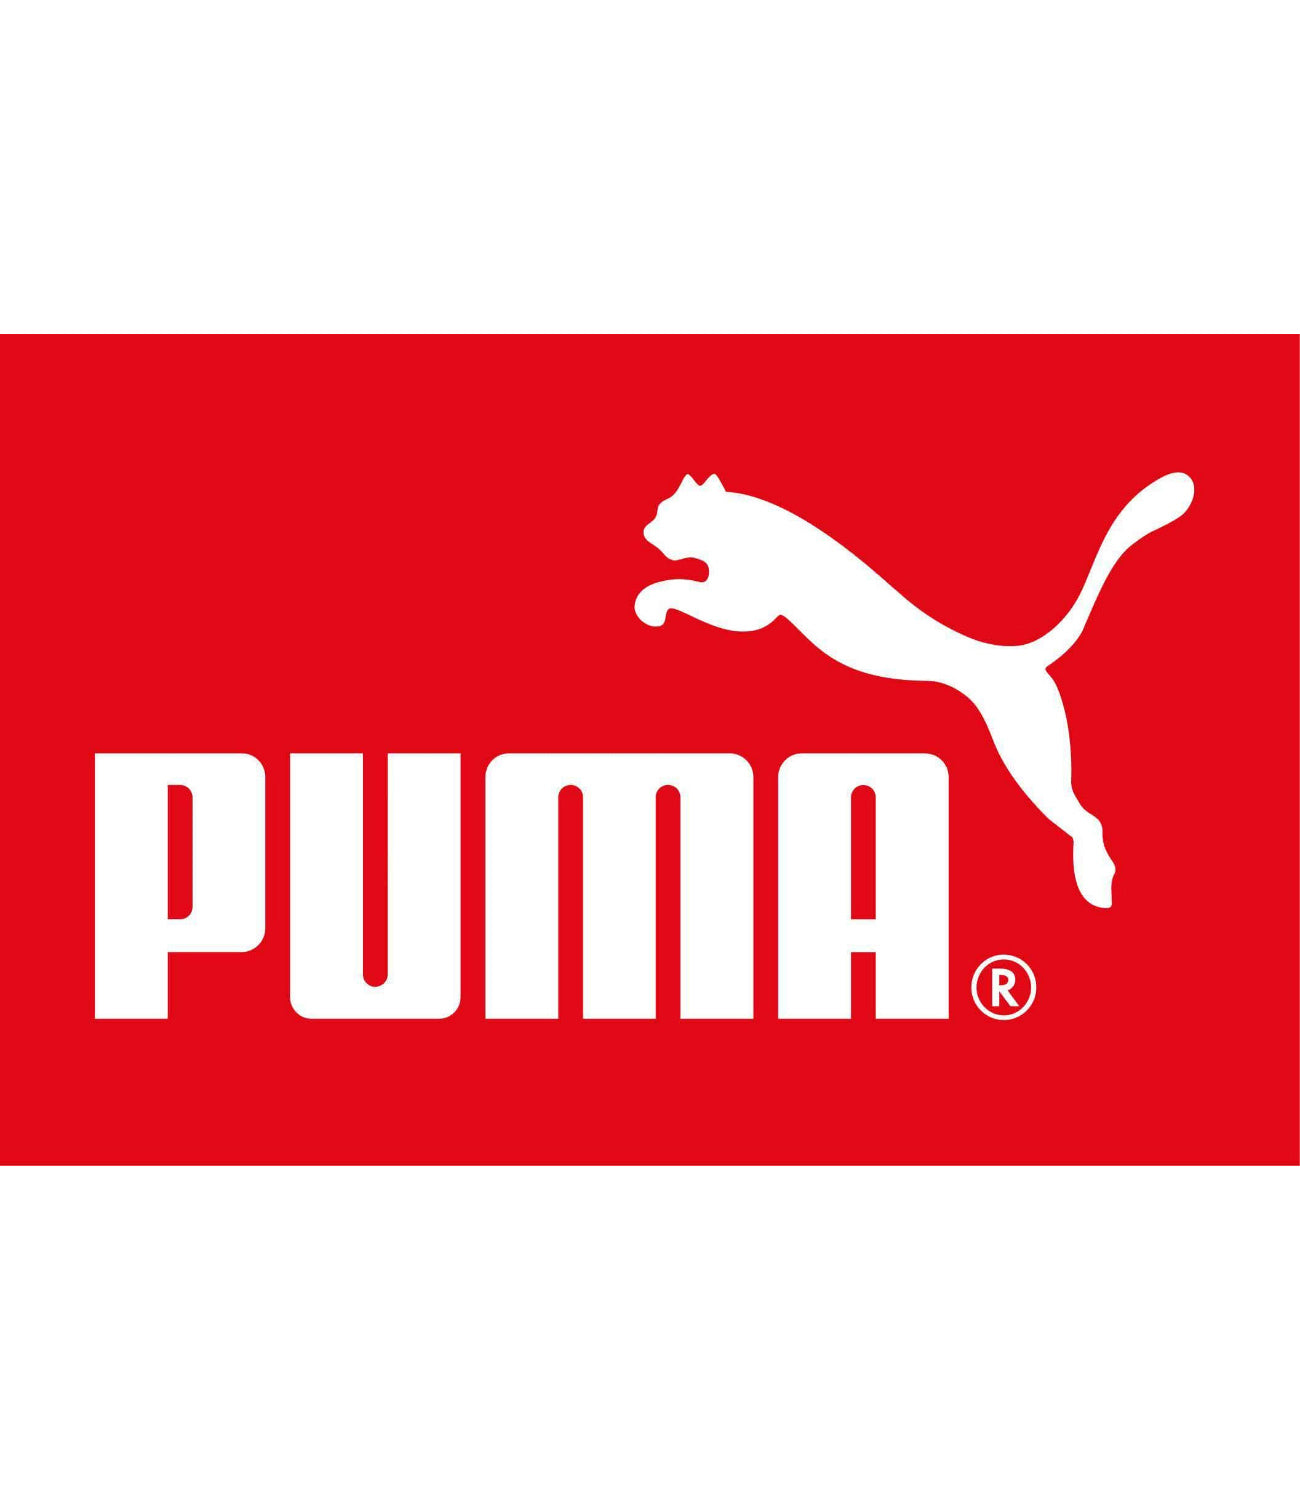 PUMA Boys 4-7 Smash Athletic Shorts